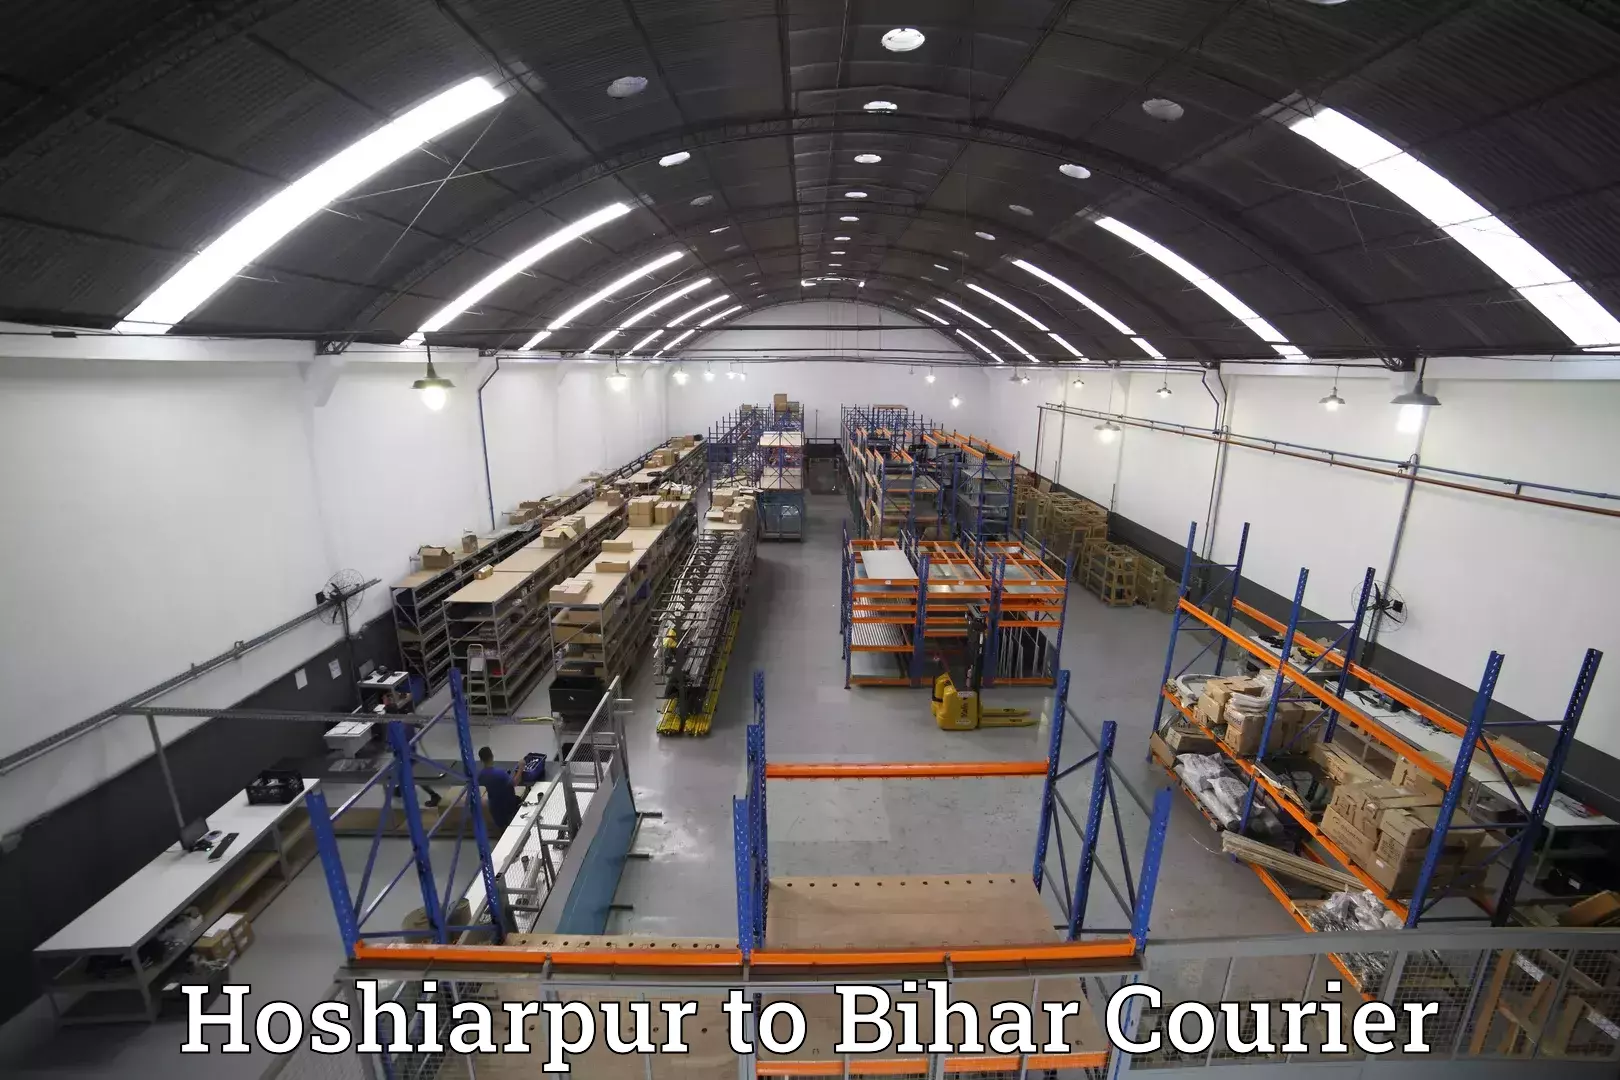 Luggage shipment specialists Hoshiarpur to Muzaffarpur